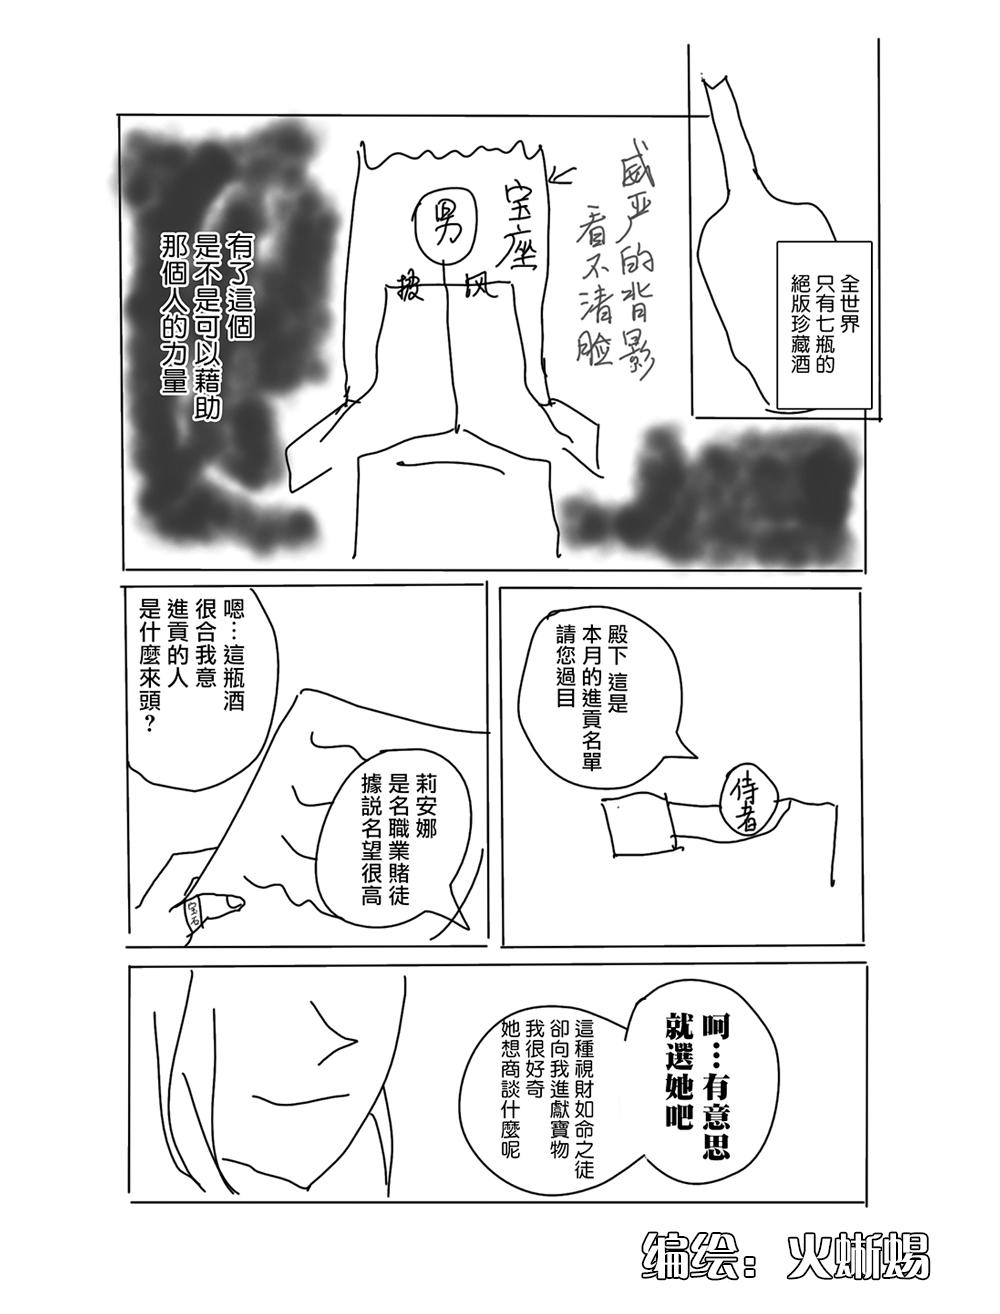 Orgame 组内第四届接龙游戏 Ffm - Page 4